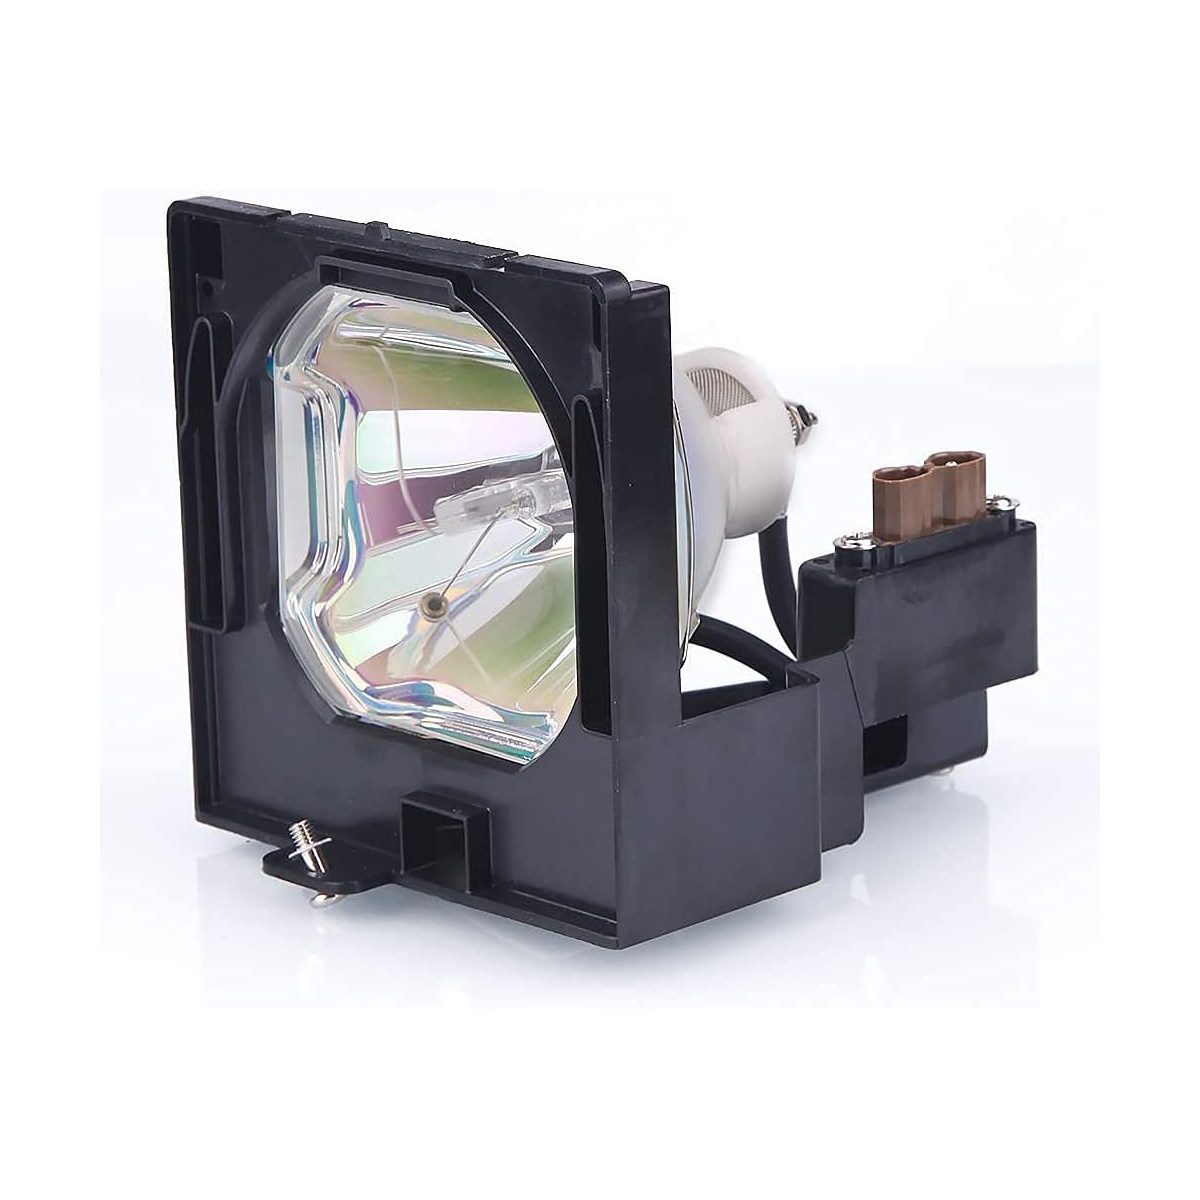 Replacement Projector lamp POA-LMP28 For Sanyo PLC-XP30 PLC-XP35 PLV-60 PLV-60HT